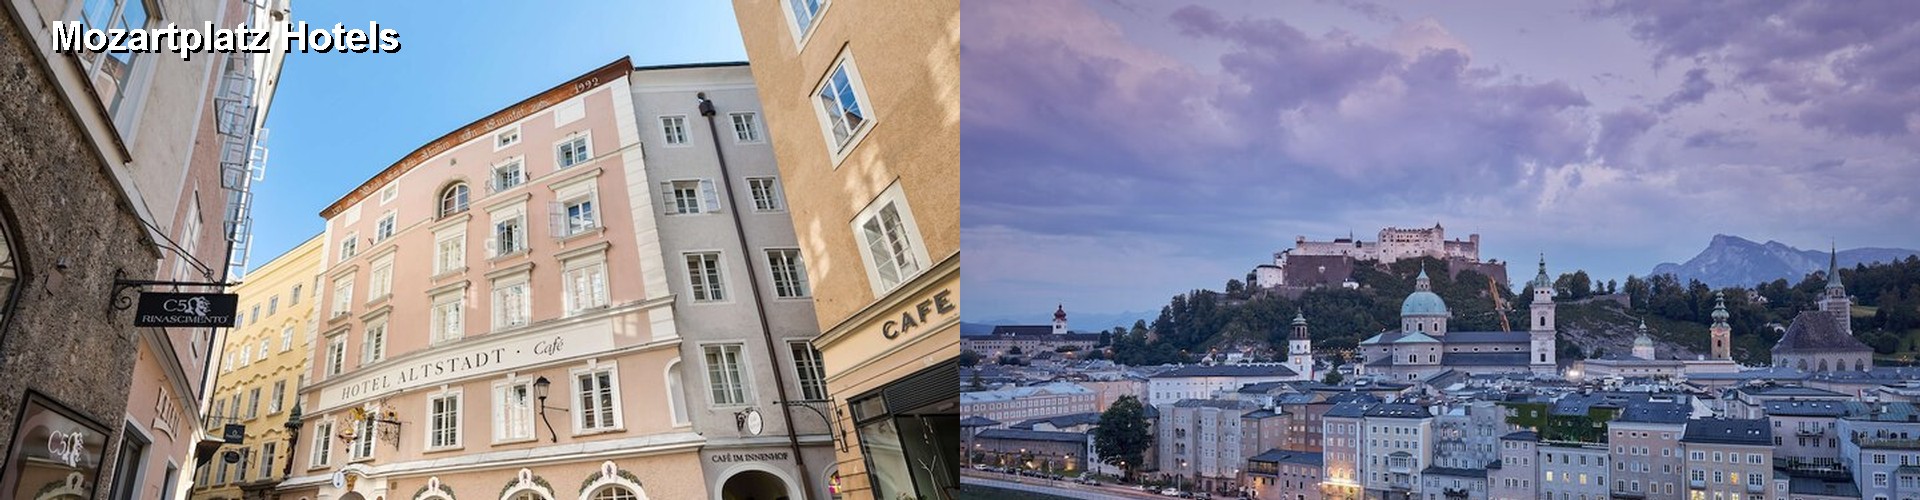 5 Best Hotels near Mozartplatz